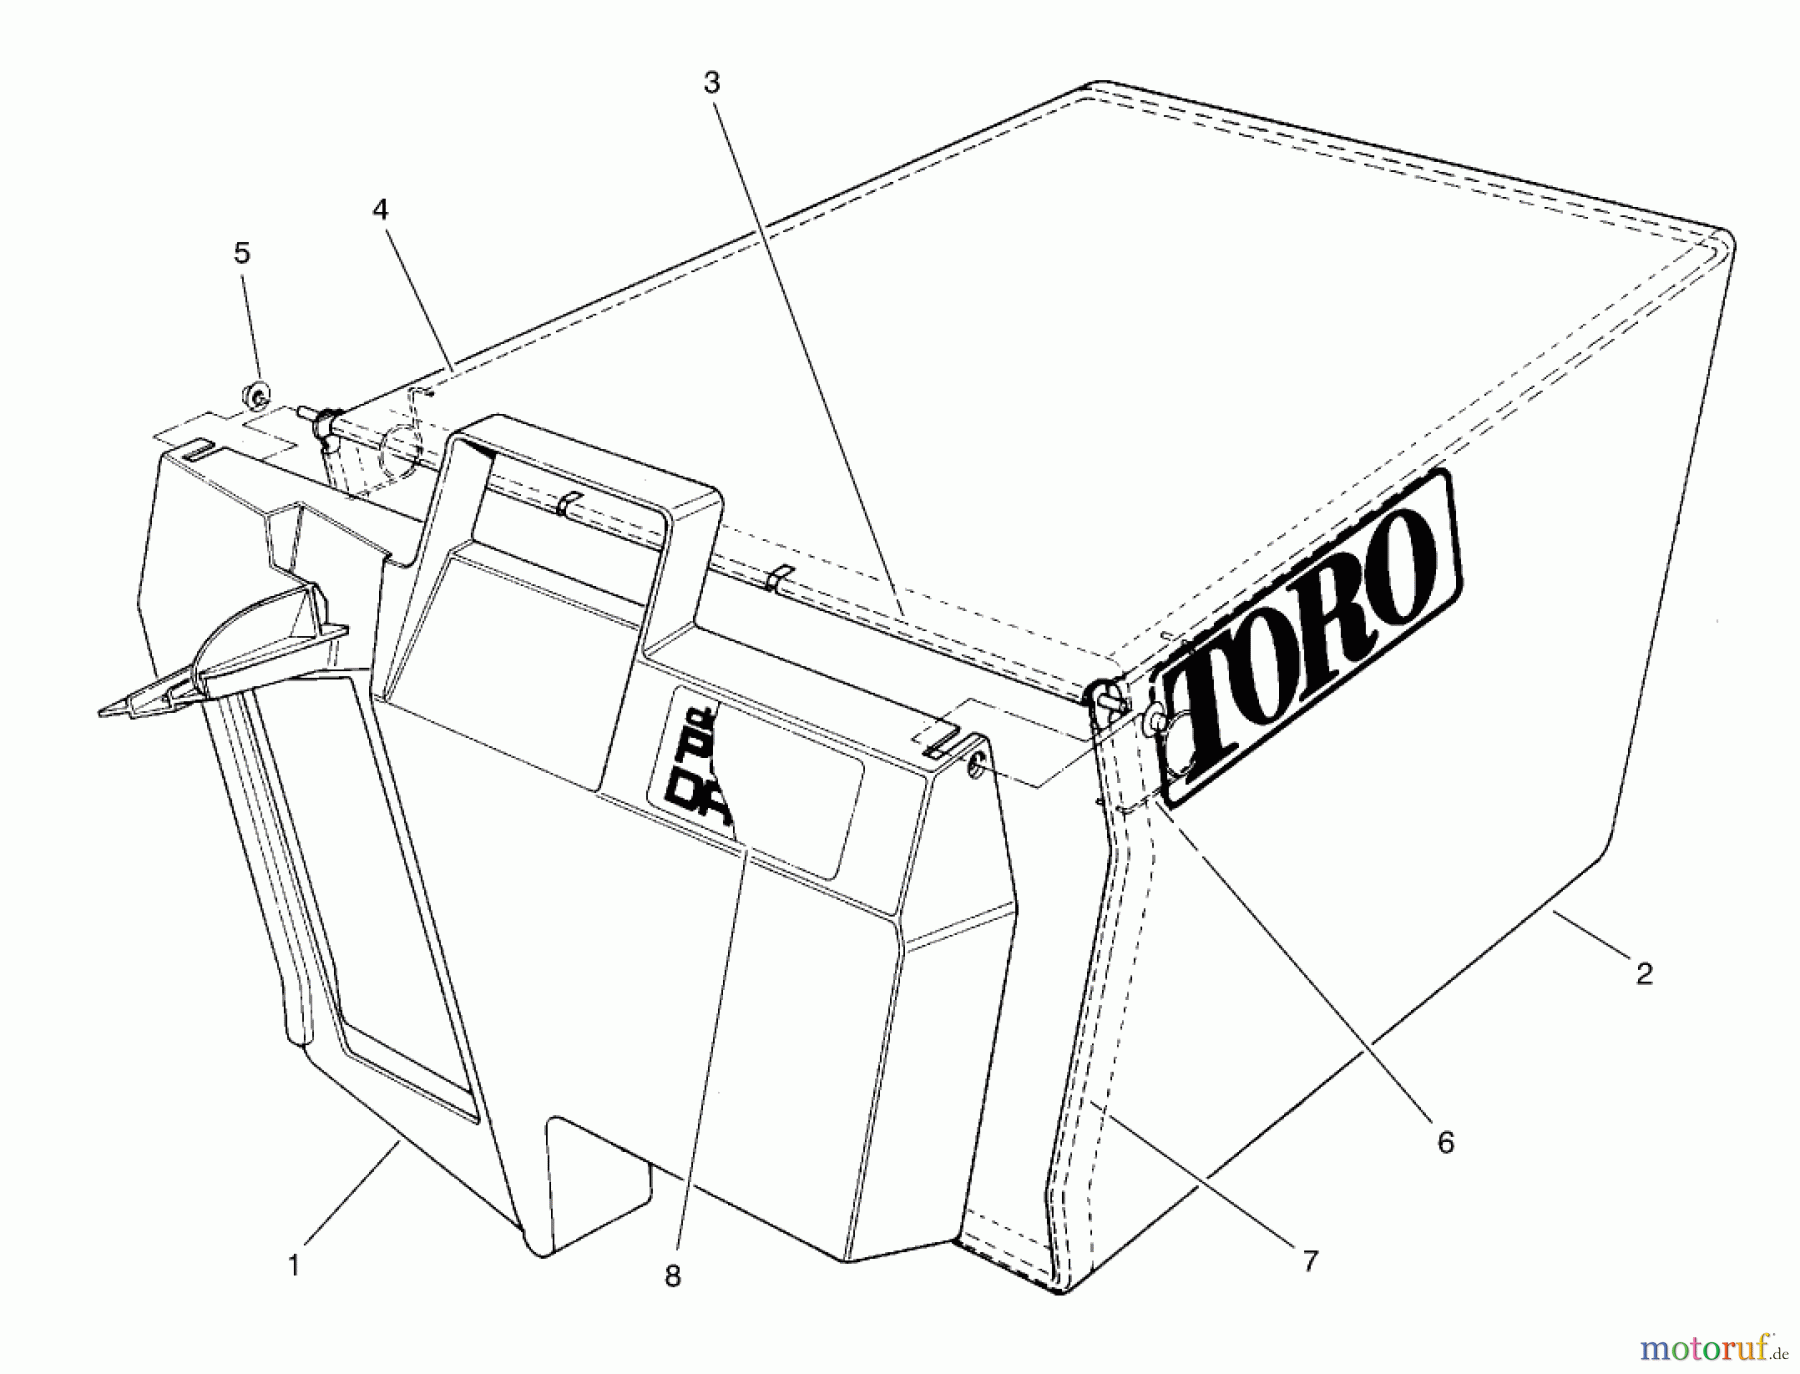  Toro Neu Accessories, Mower 59296 - Toro Rear Bag Kit, 21